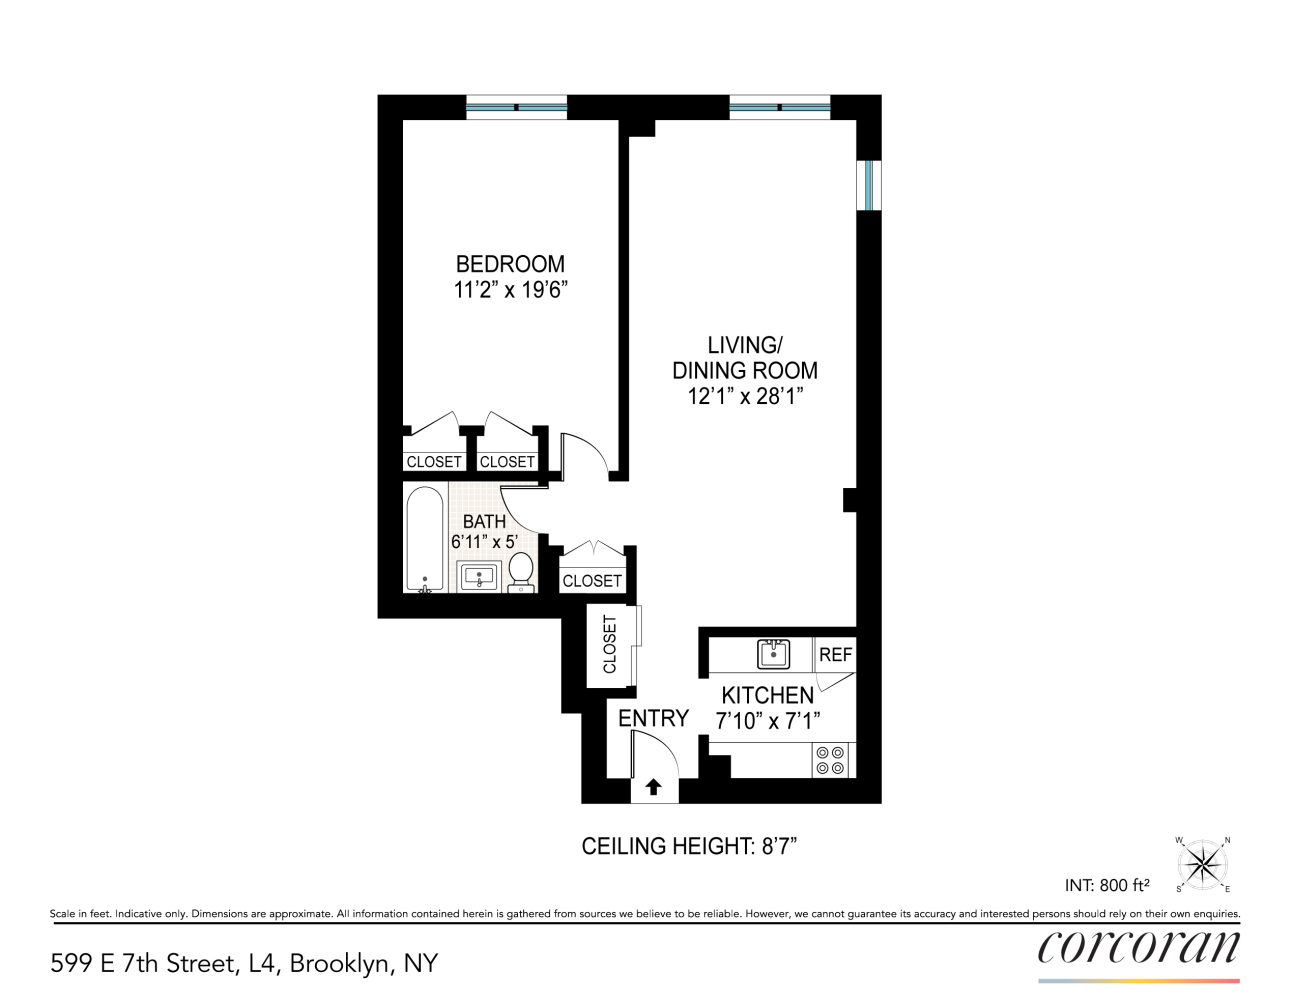 Floorplan for 599 East 7th Street, L4